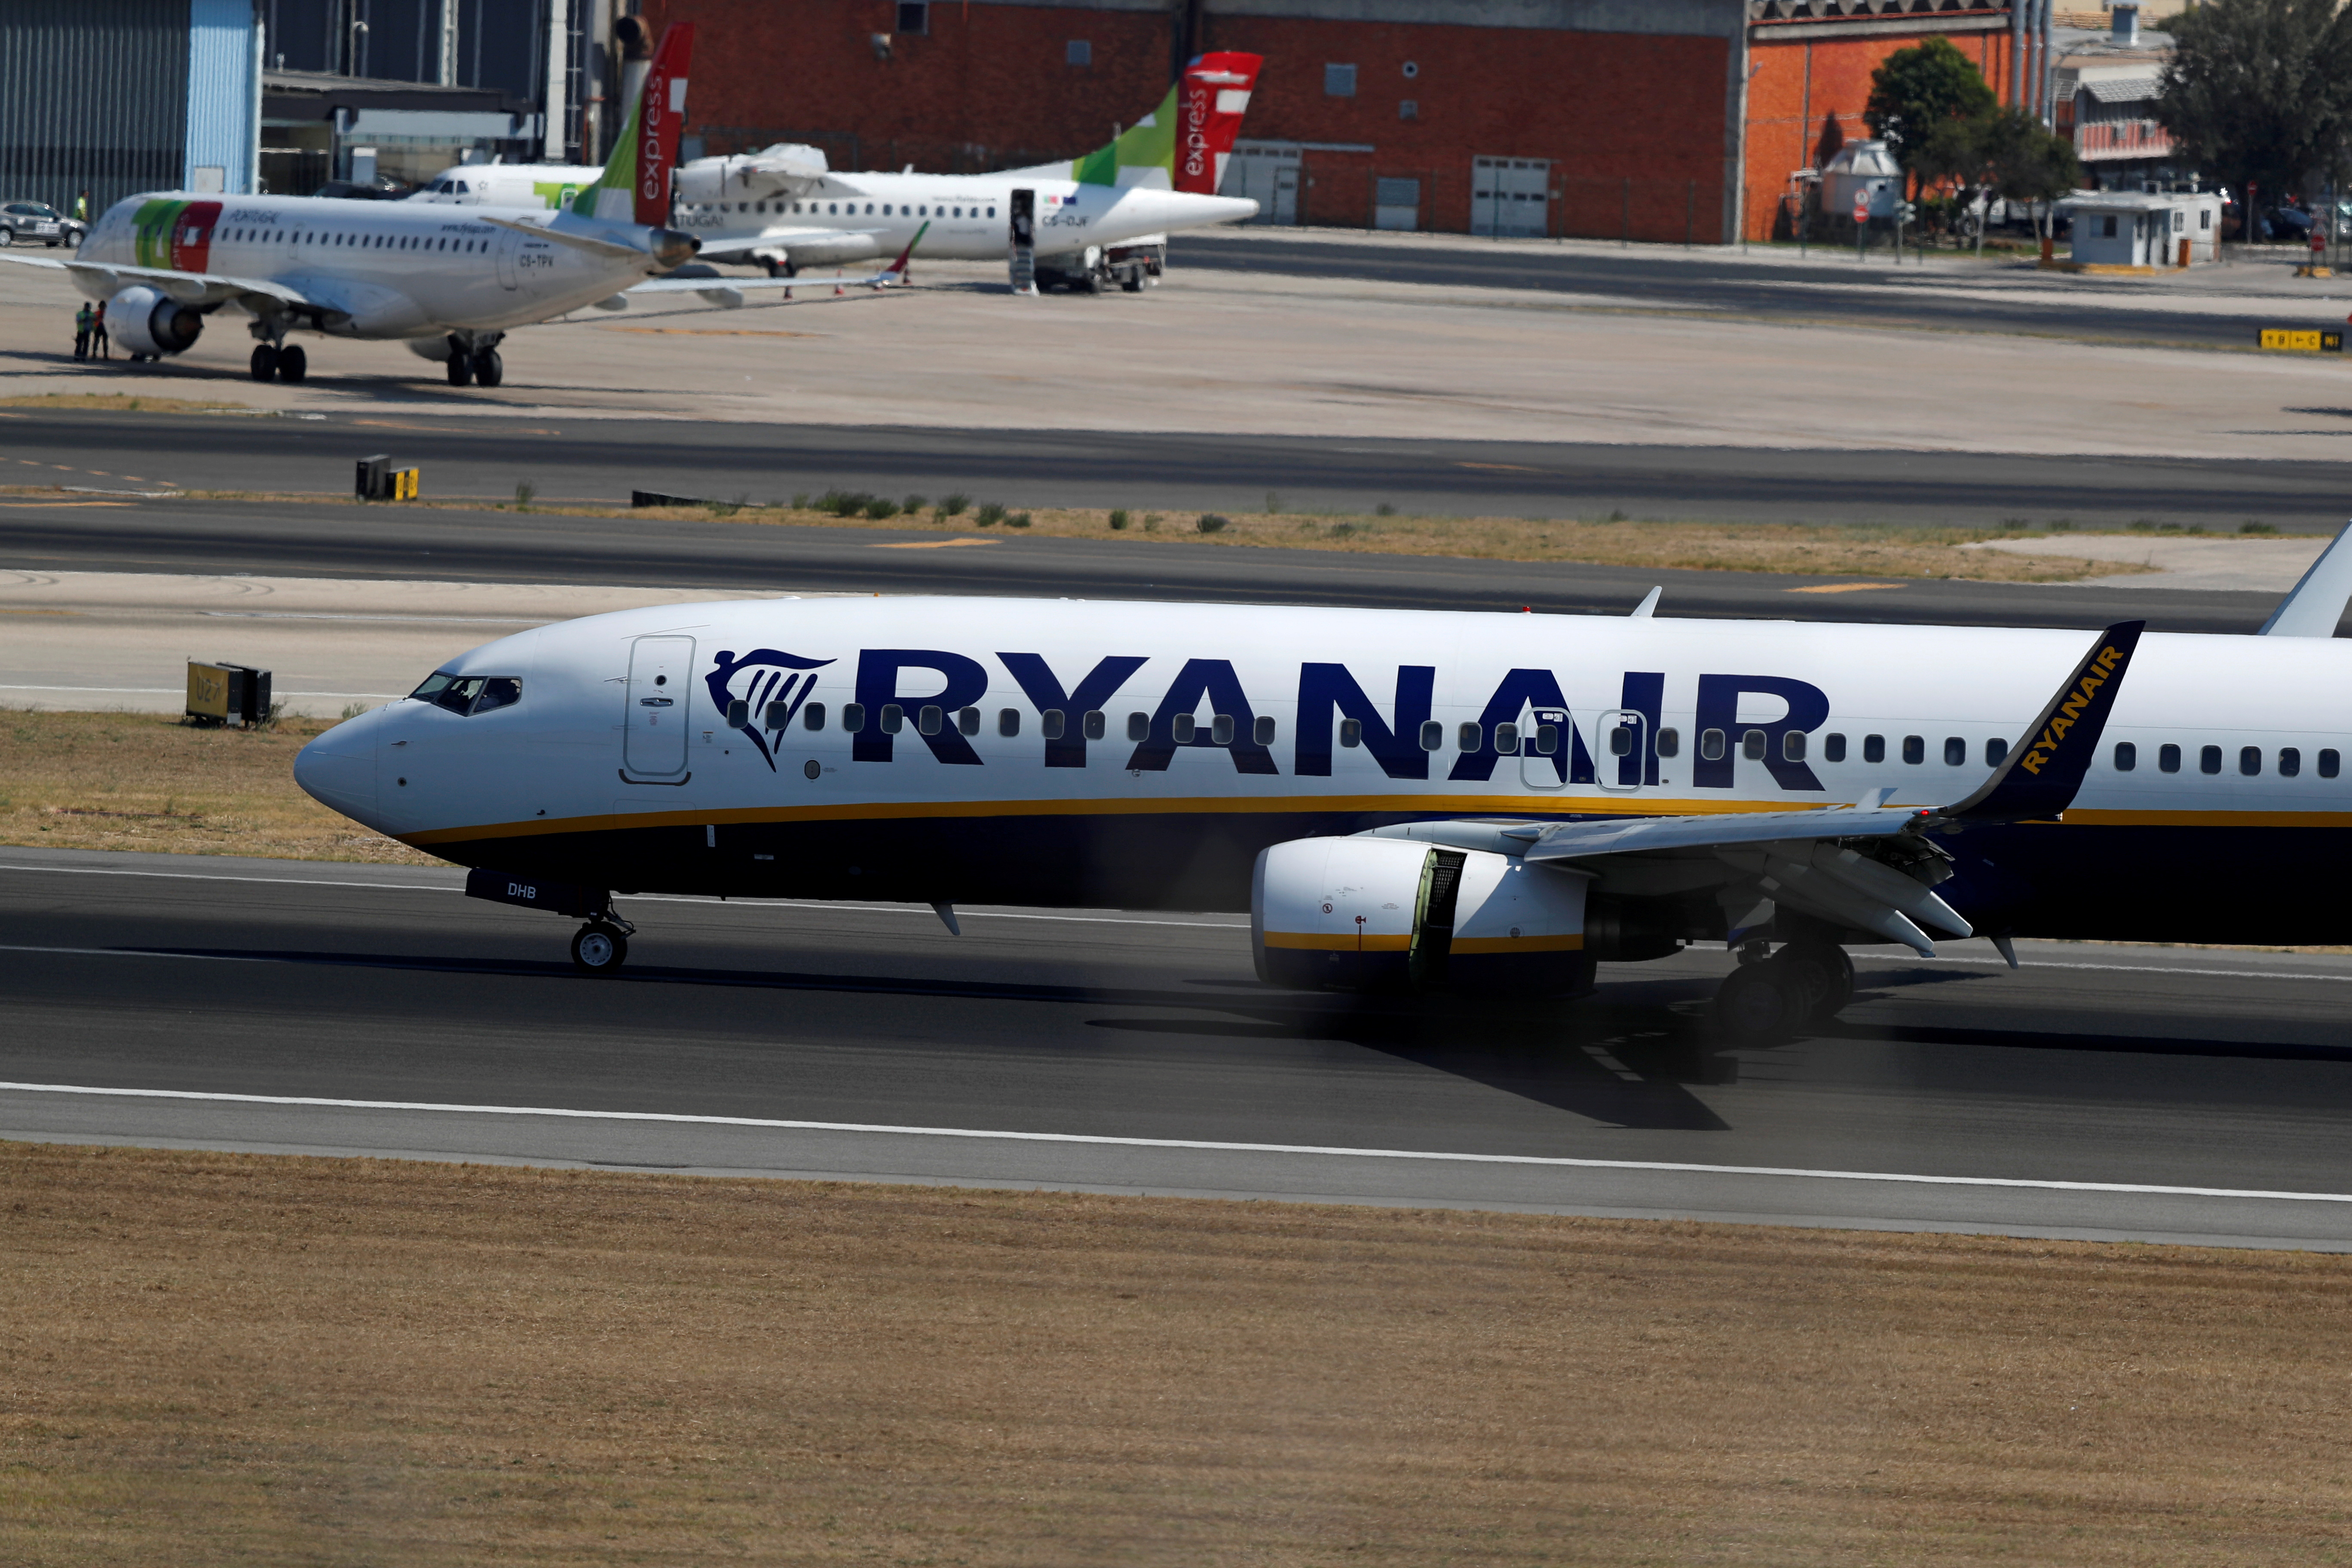 A Ryanair plane taxis at Lisbon's airport